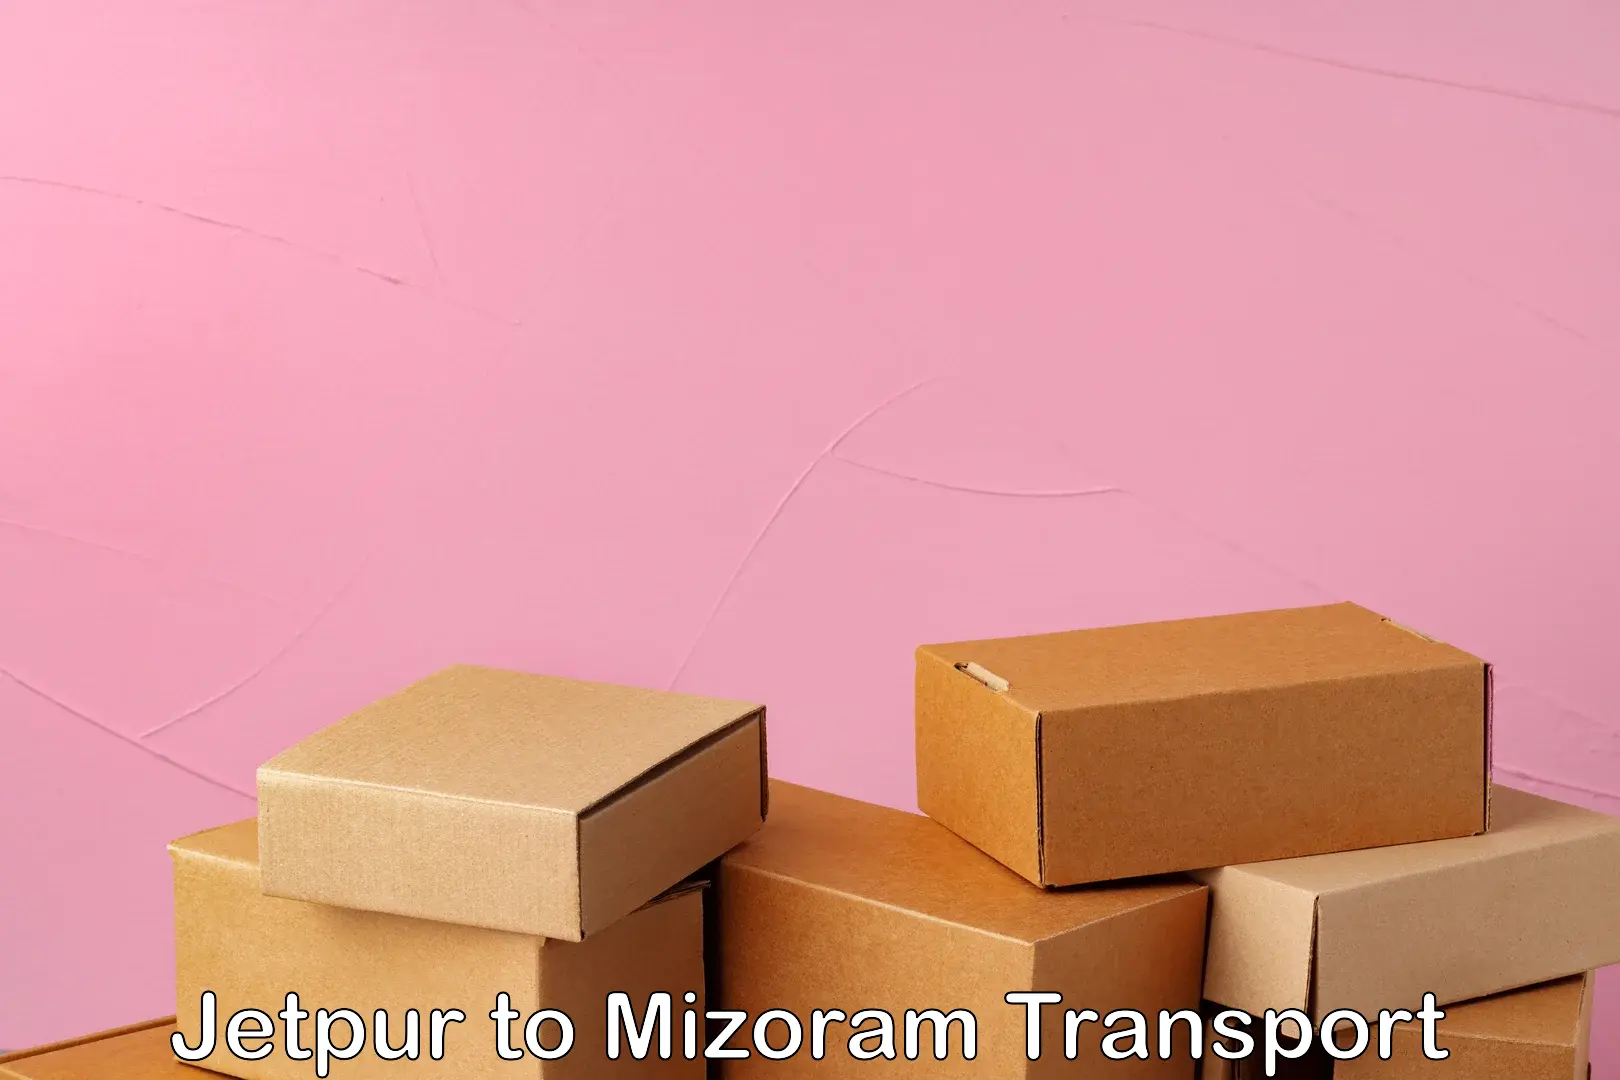 Online transport service Jetpur to Mizoram